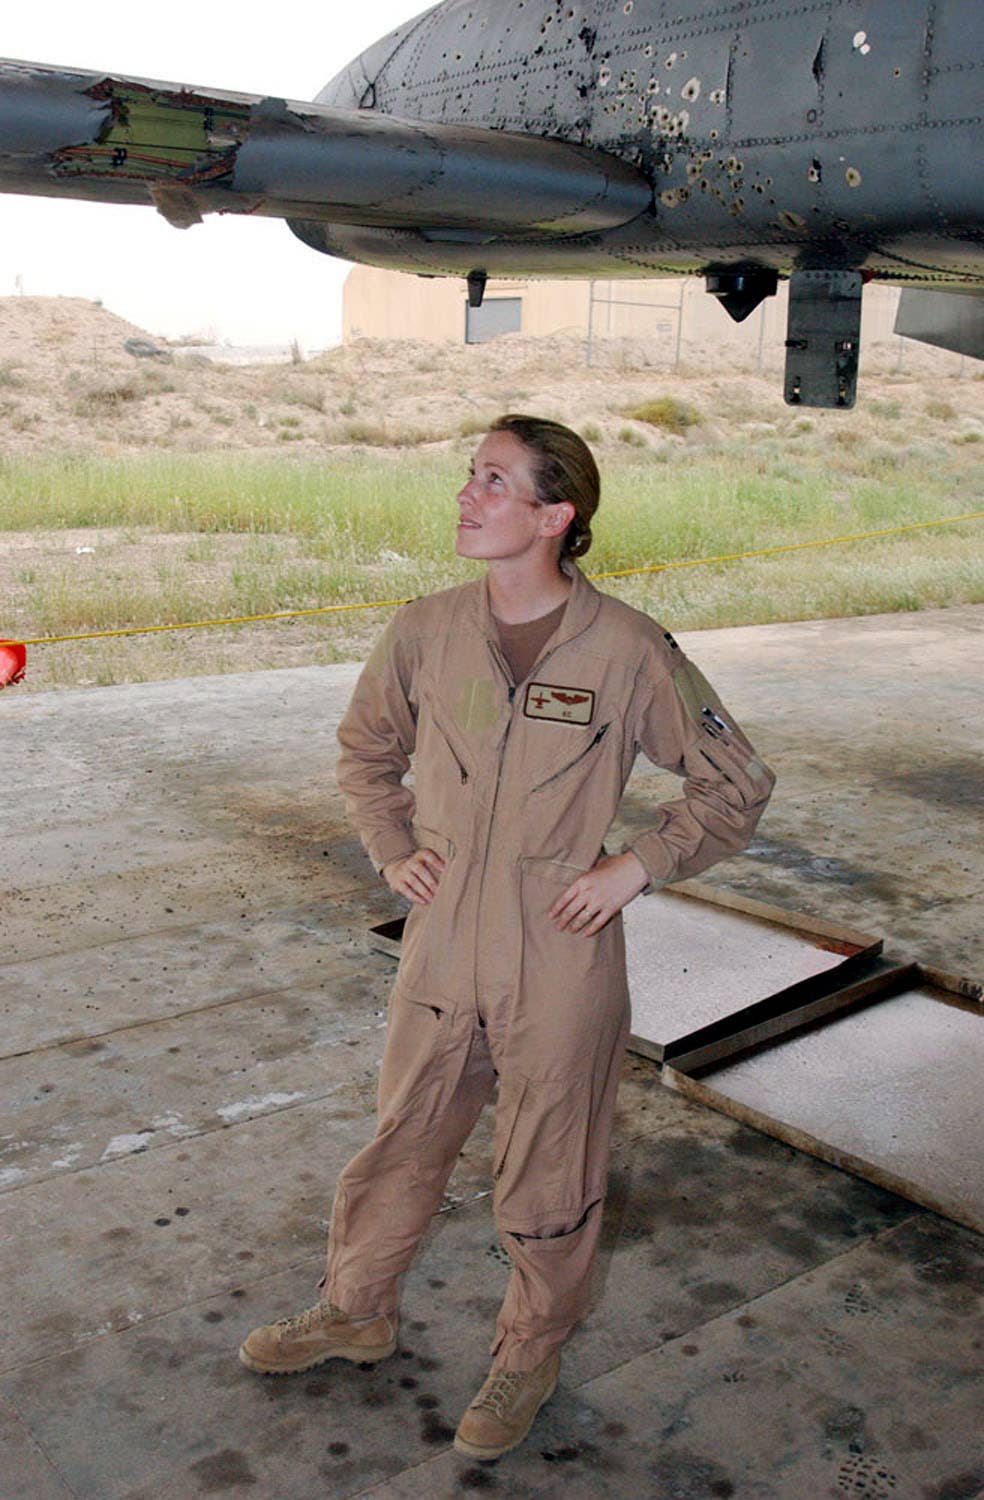 Then Capt. Kim Campbell surveys the battle damage to her airplane after it was hit over Baghdad during a close air support mission on April 7. <em>via Kim “KC” Campbell</em>